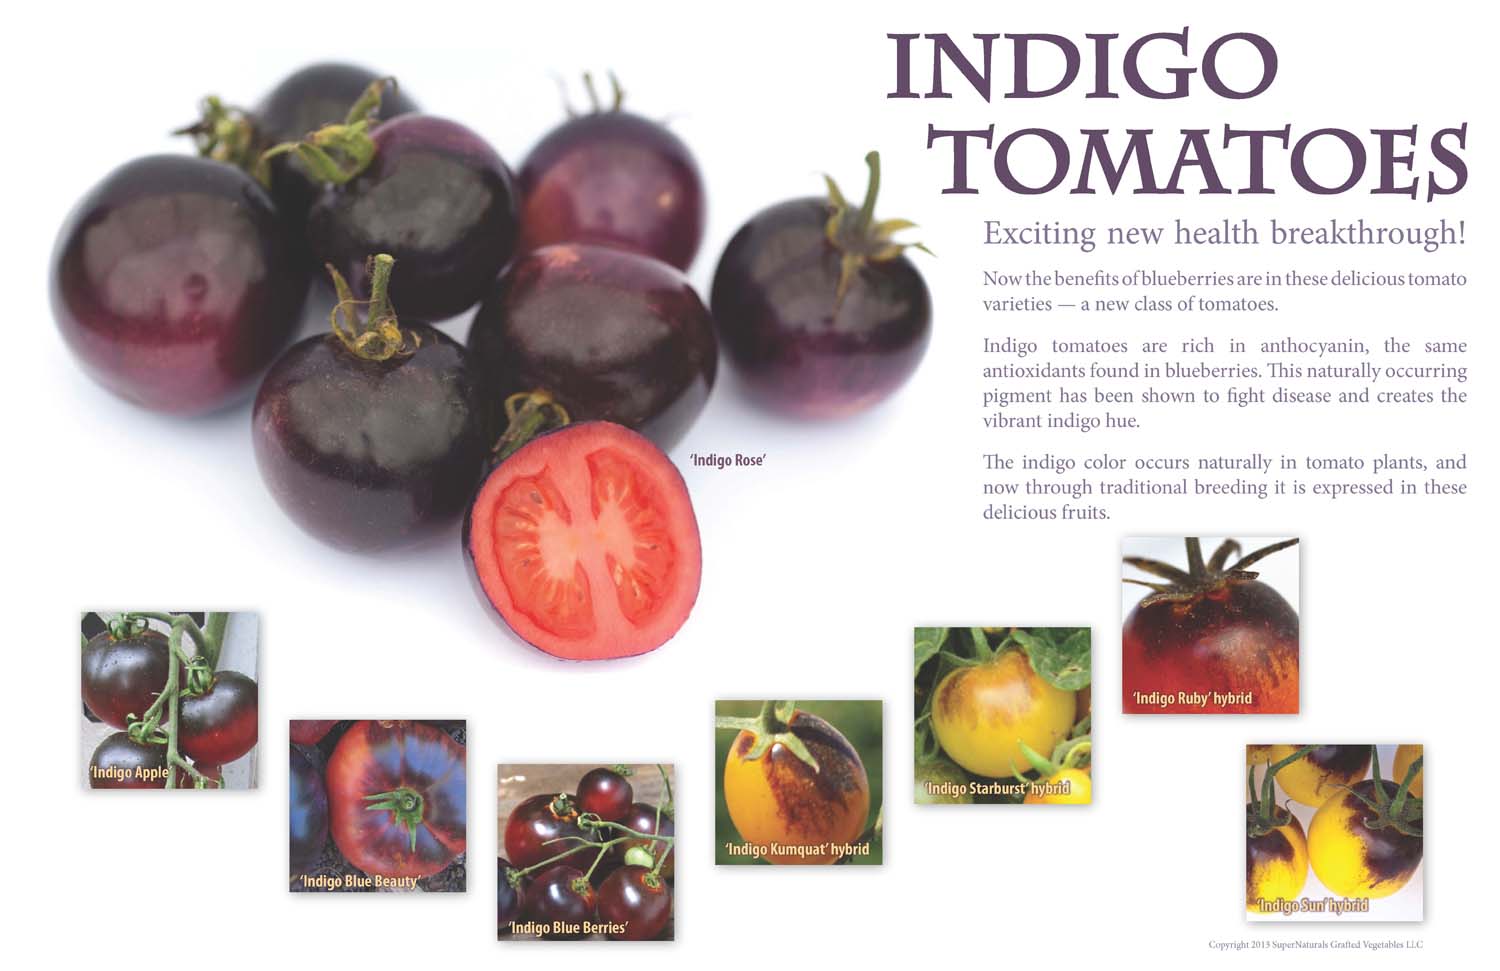 Indigo tomatoes